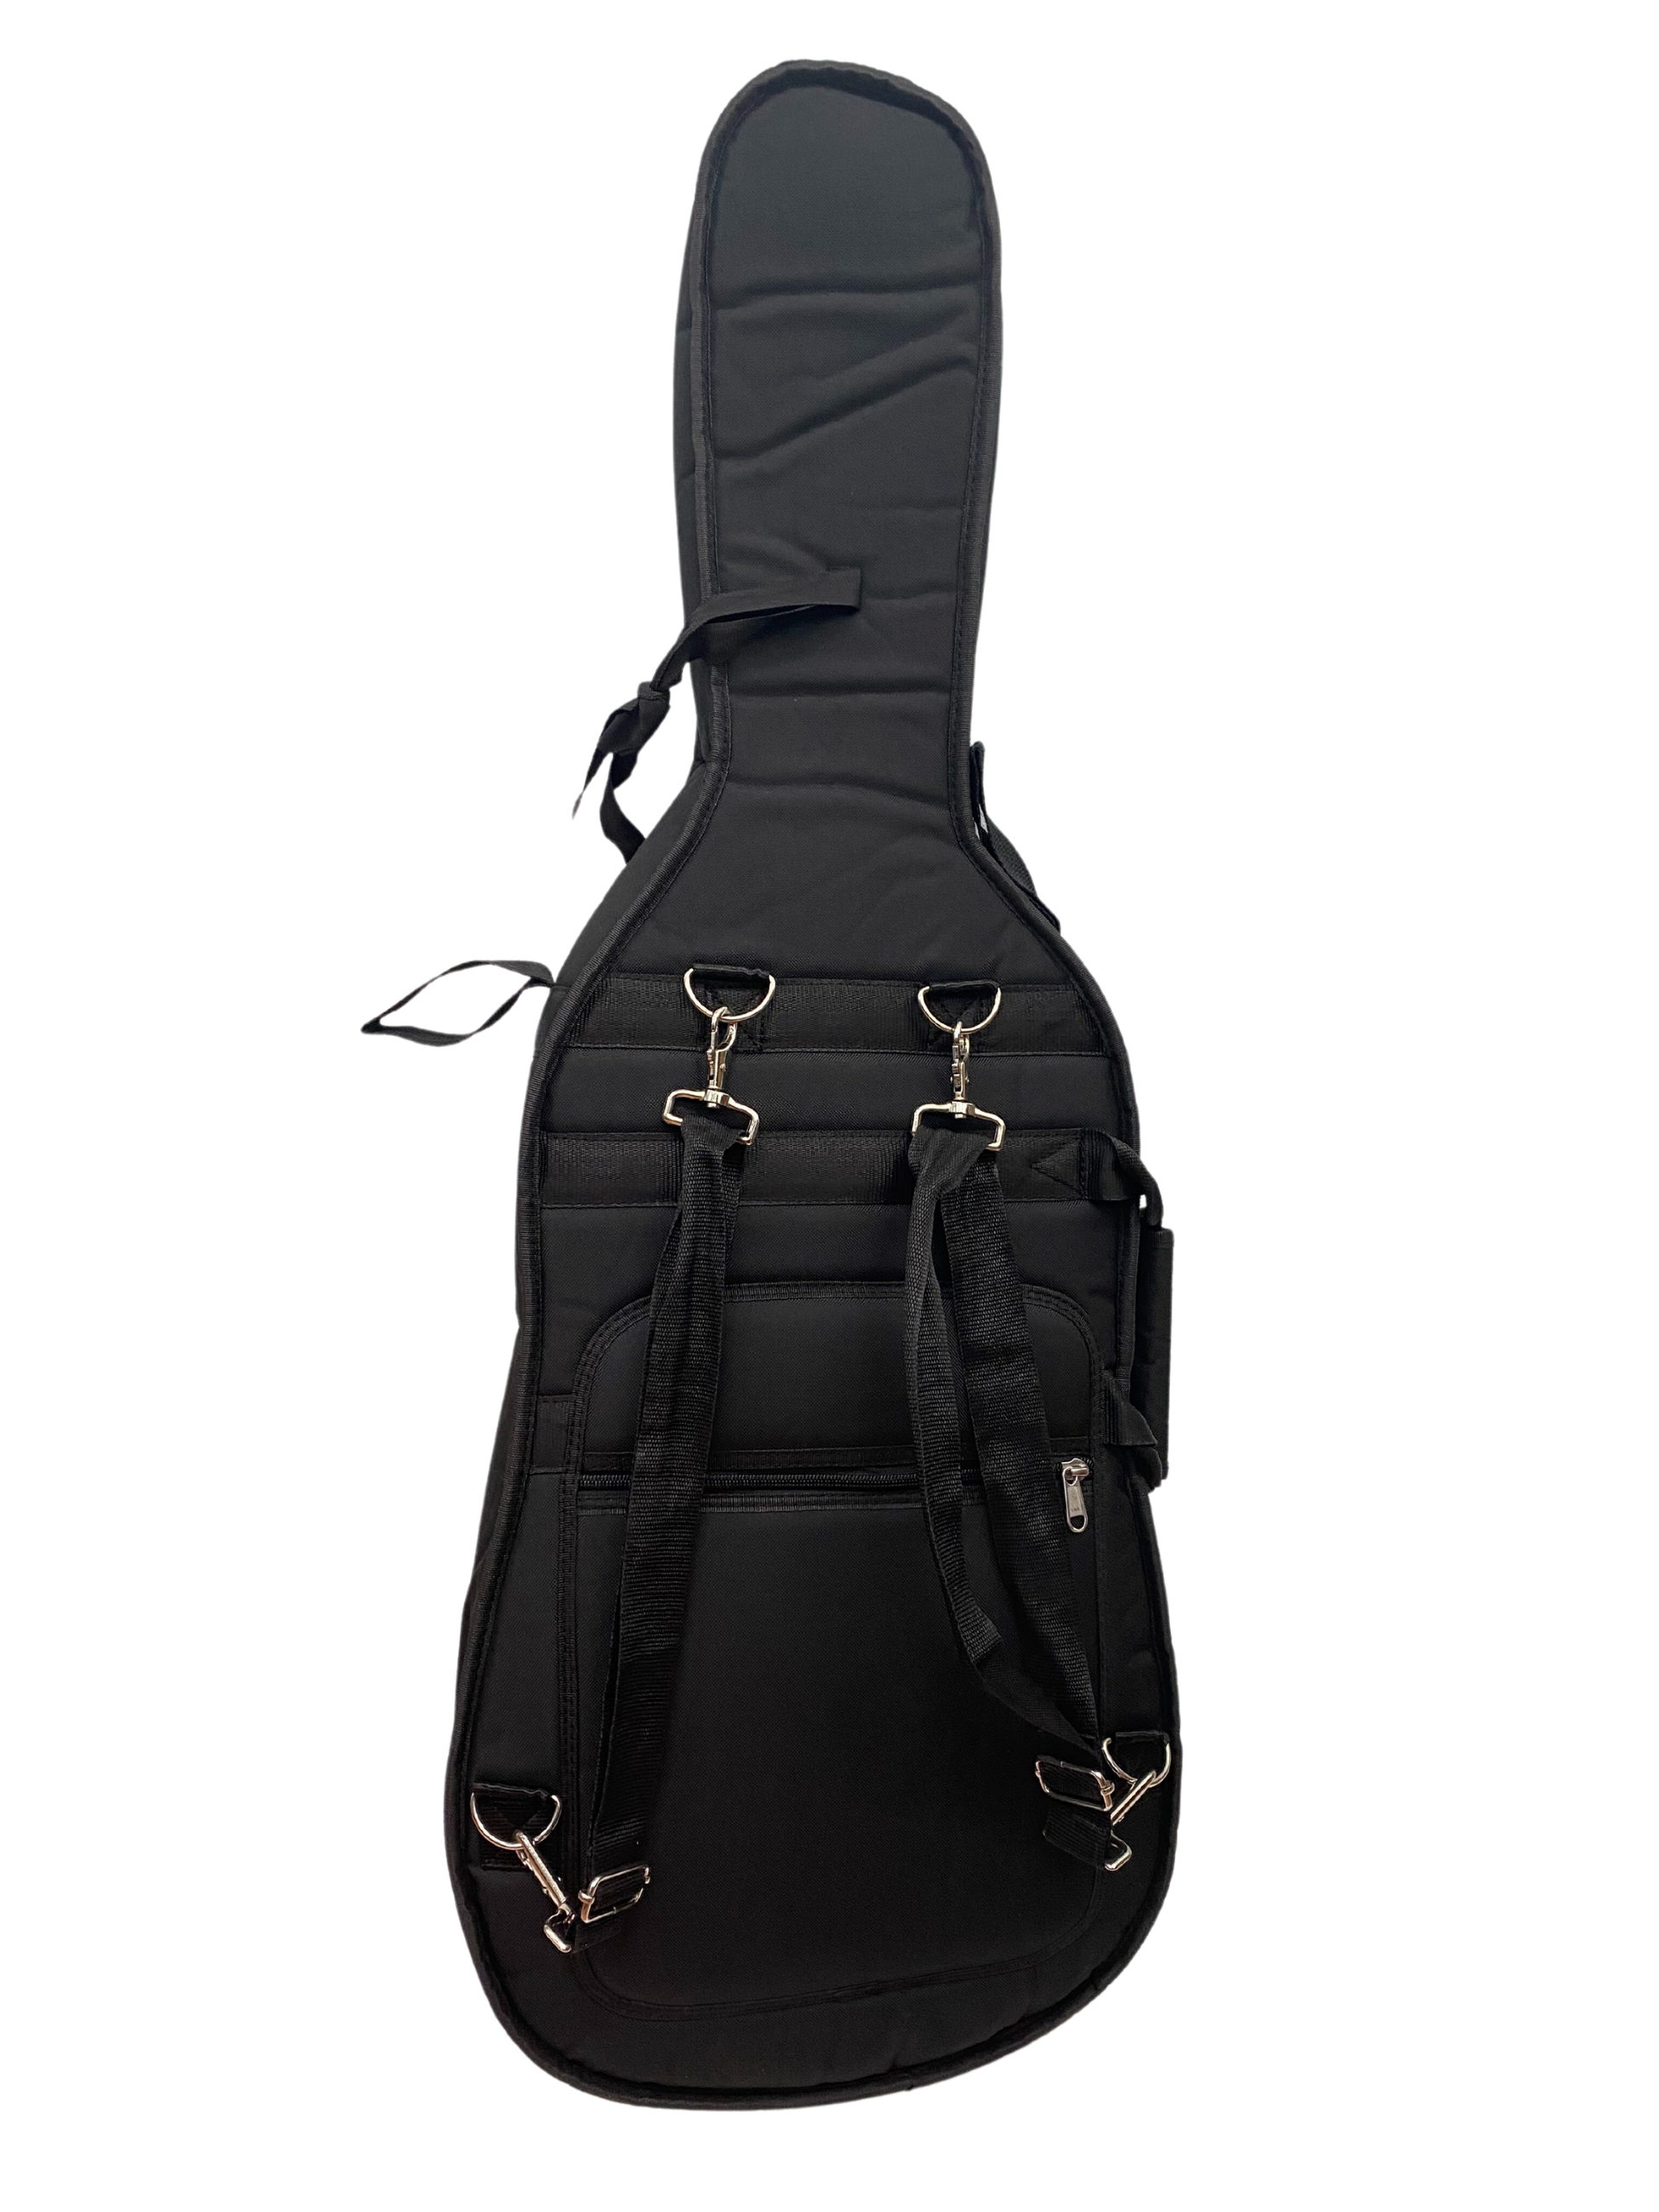 cello prodigy bag back